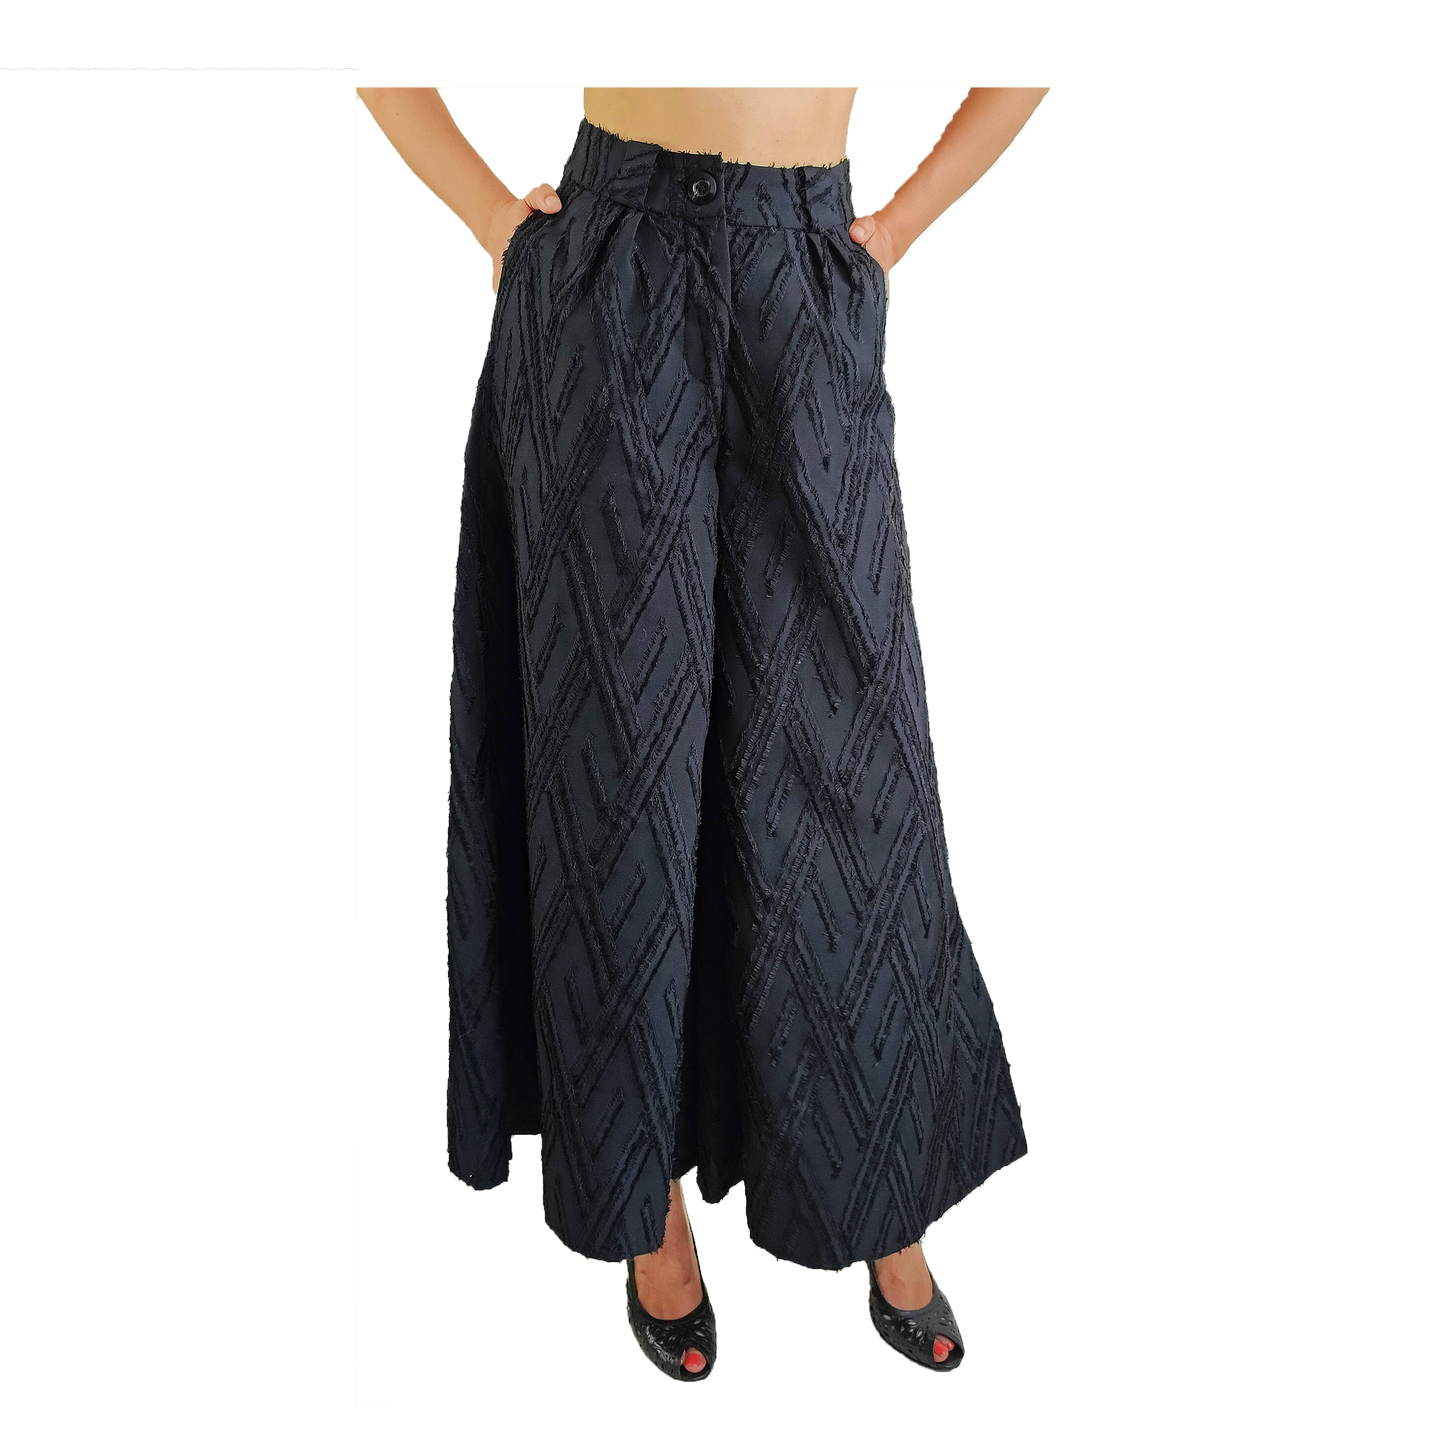 Black wide legged wool pants with frayed herringbone detailing